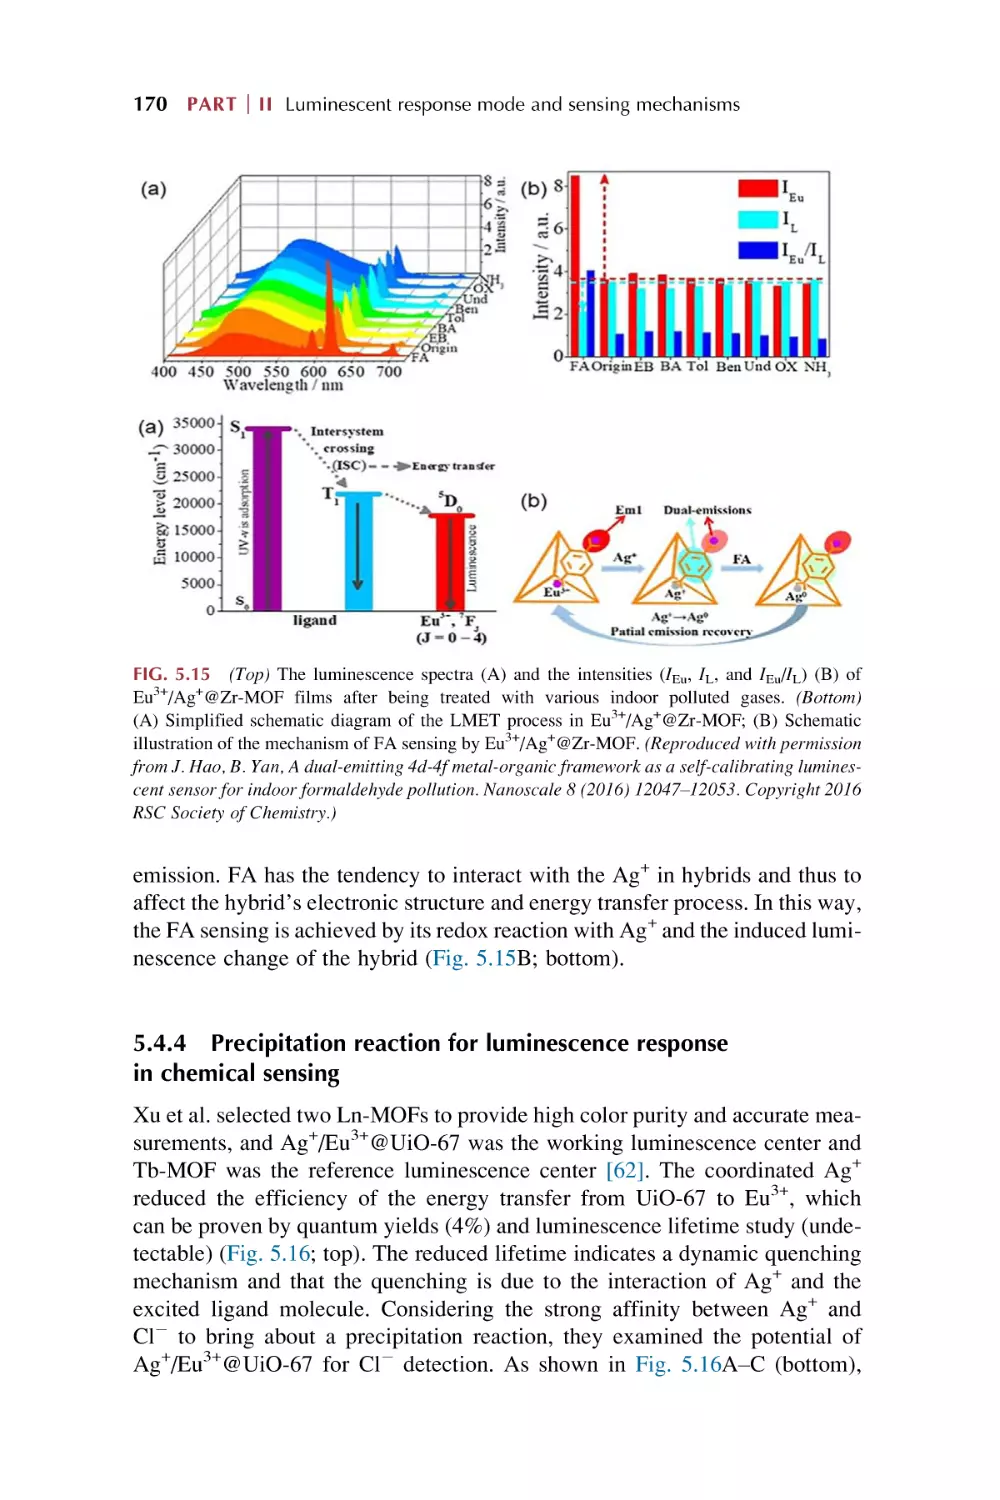 5.4.4. Precipitation reaction for luminescence response in chemical sensing